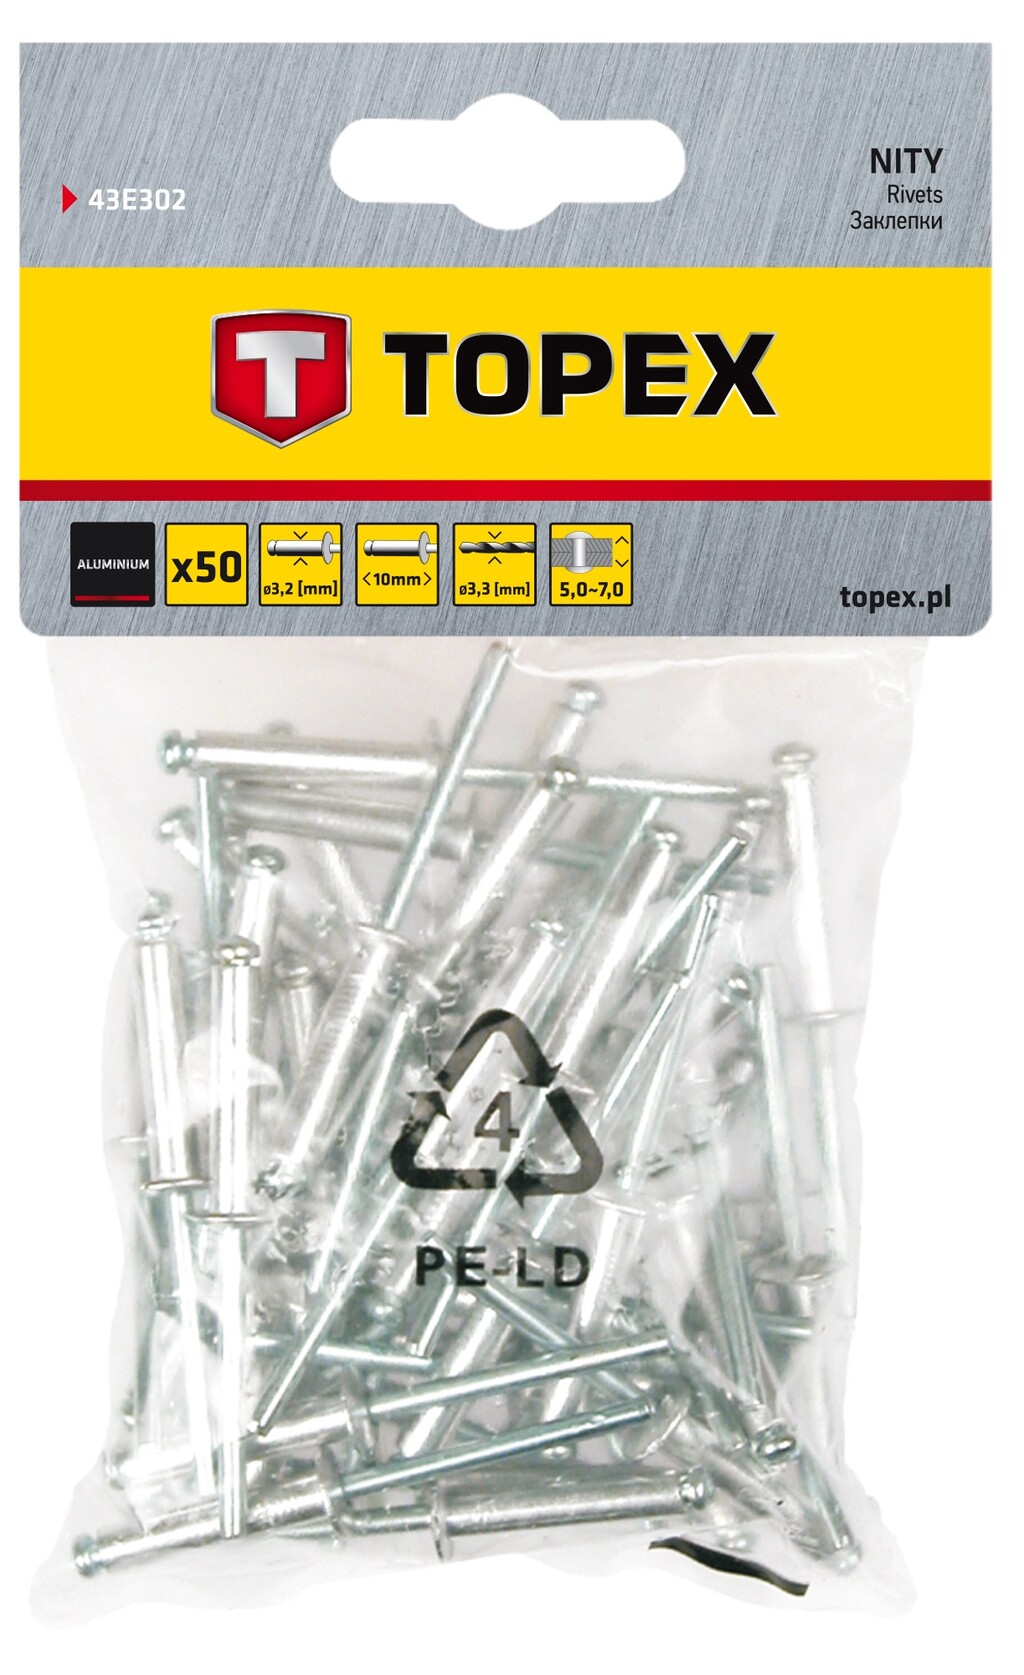 Заклепки алюмiнiєвi Topex 43E302 3.2 мм x 10 мм, 50 шт.*1 уп.